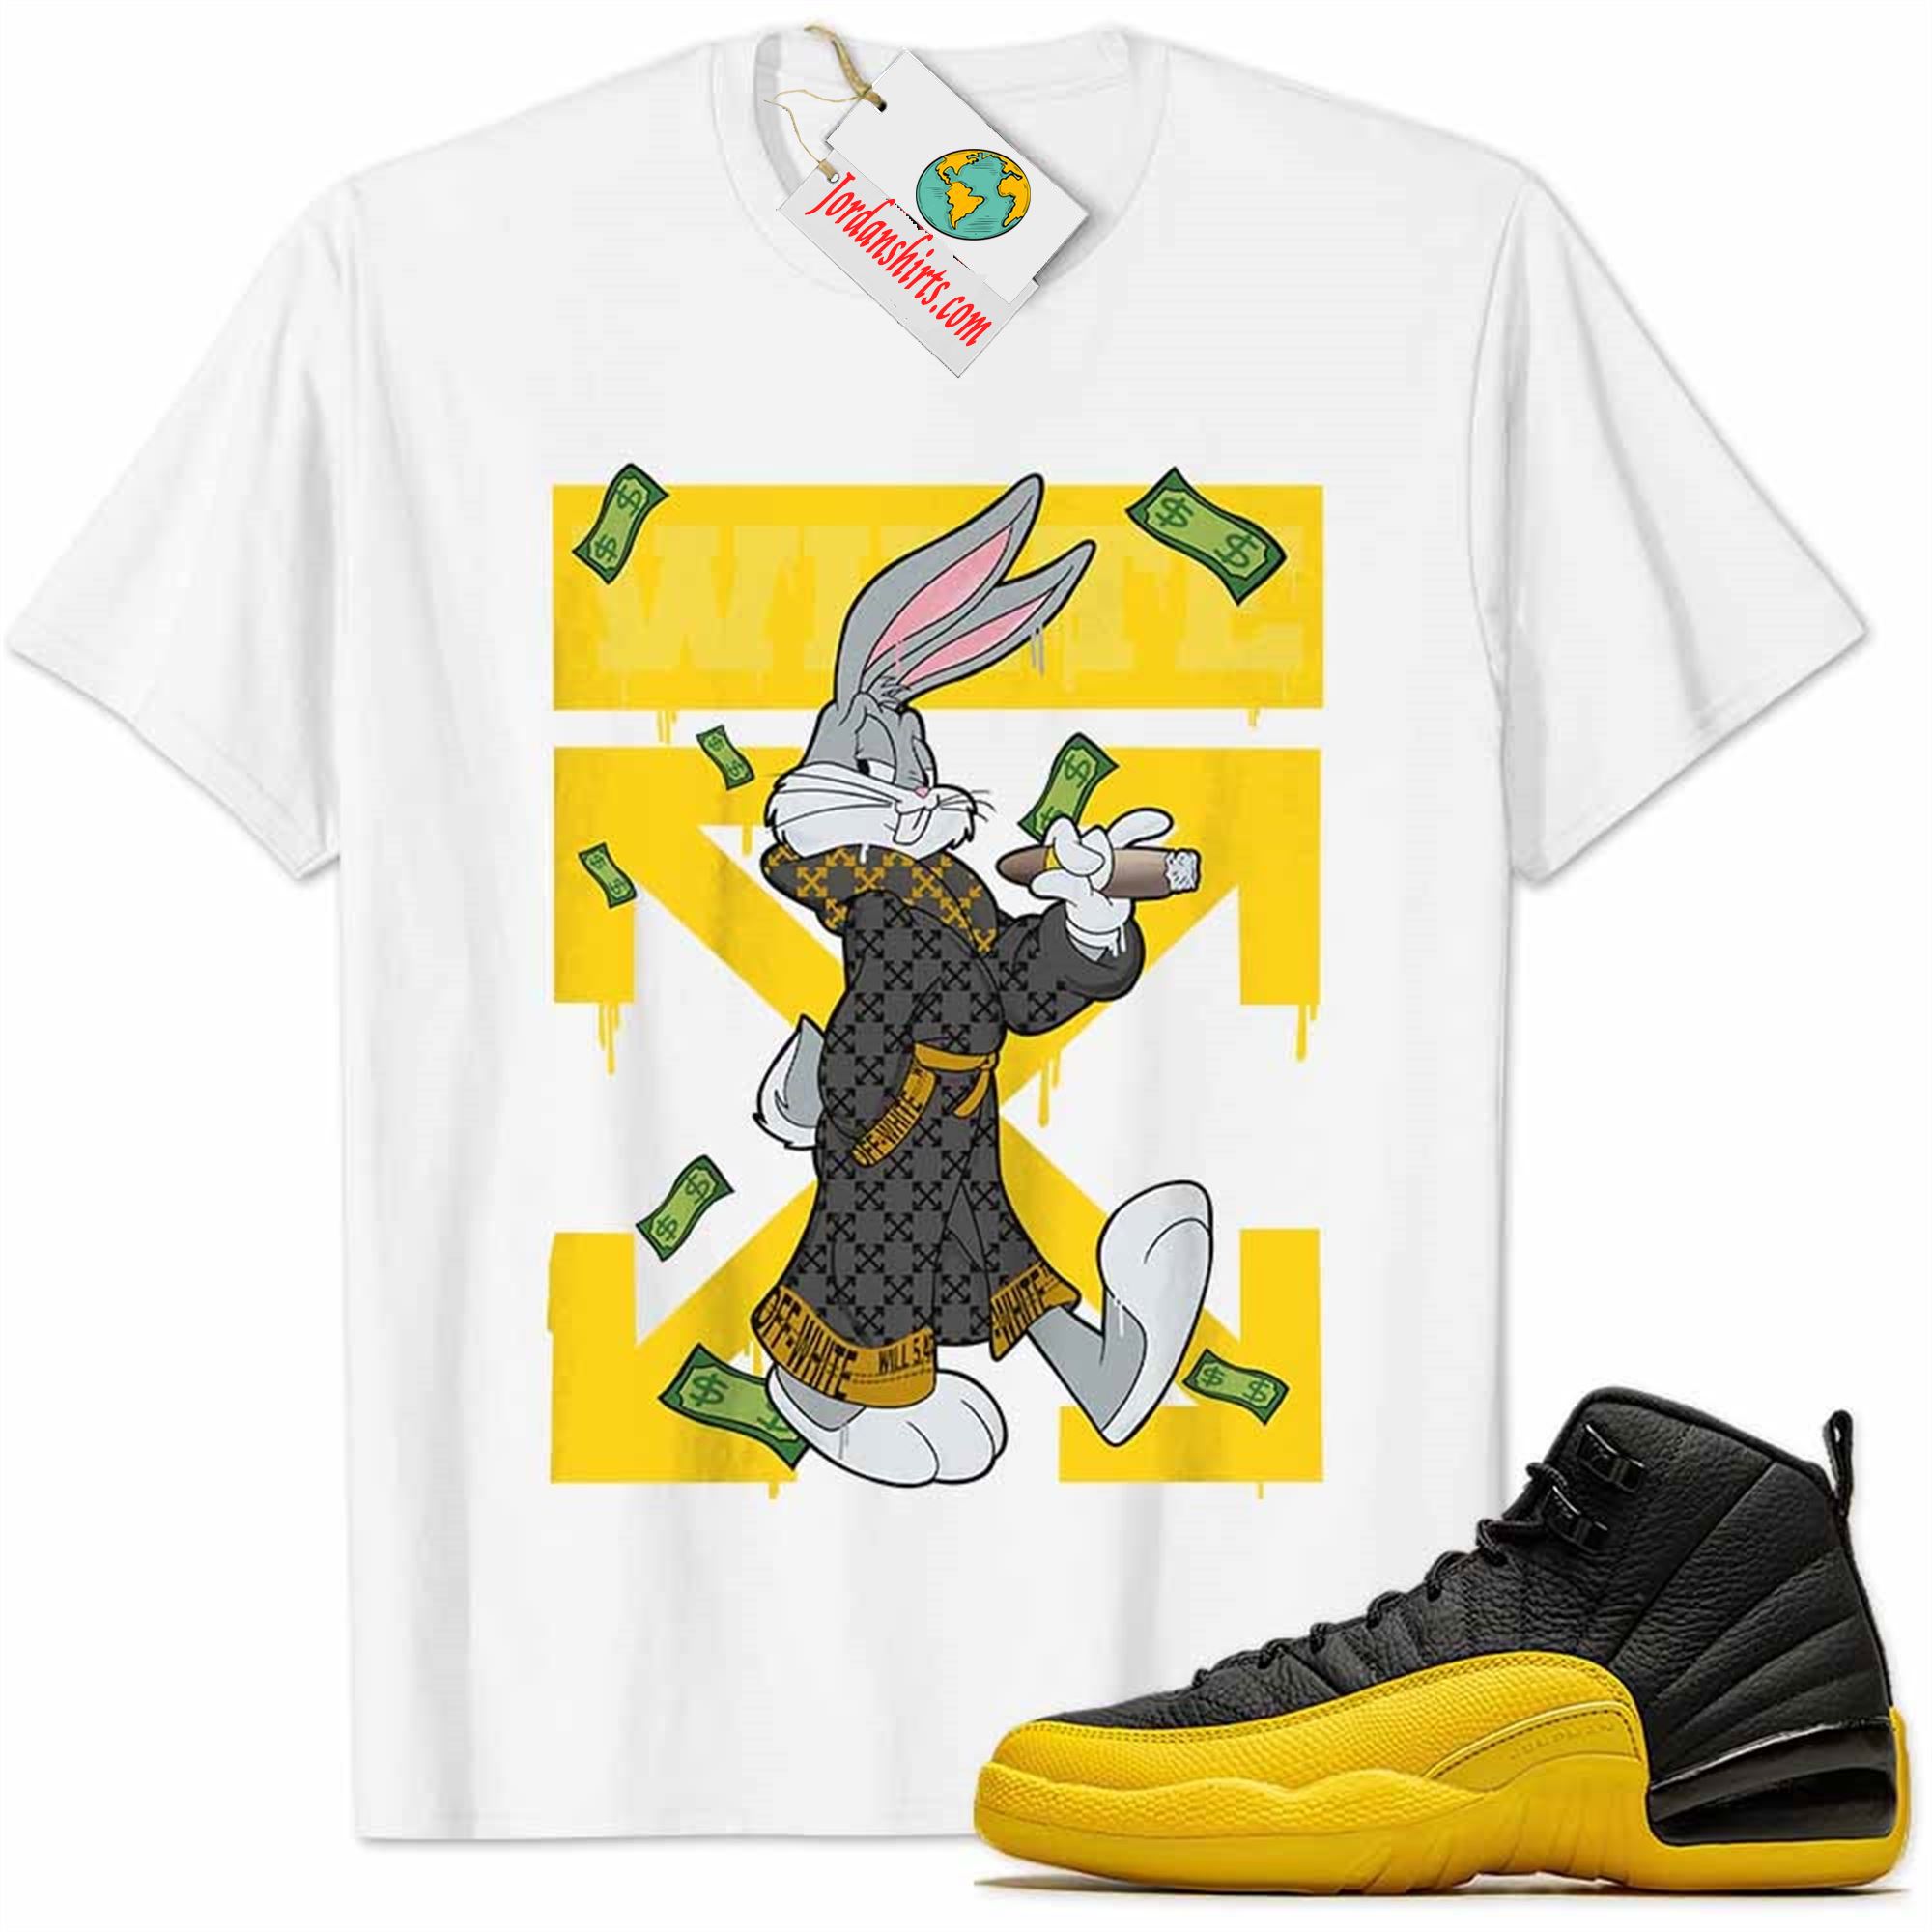 Jordan 12 Shirt, Jordan 12 University Gold Shirt Bug Bunny Smokes Weed Money Falling White Size Up To 5xl